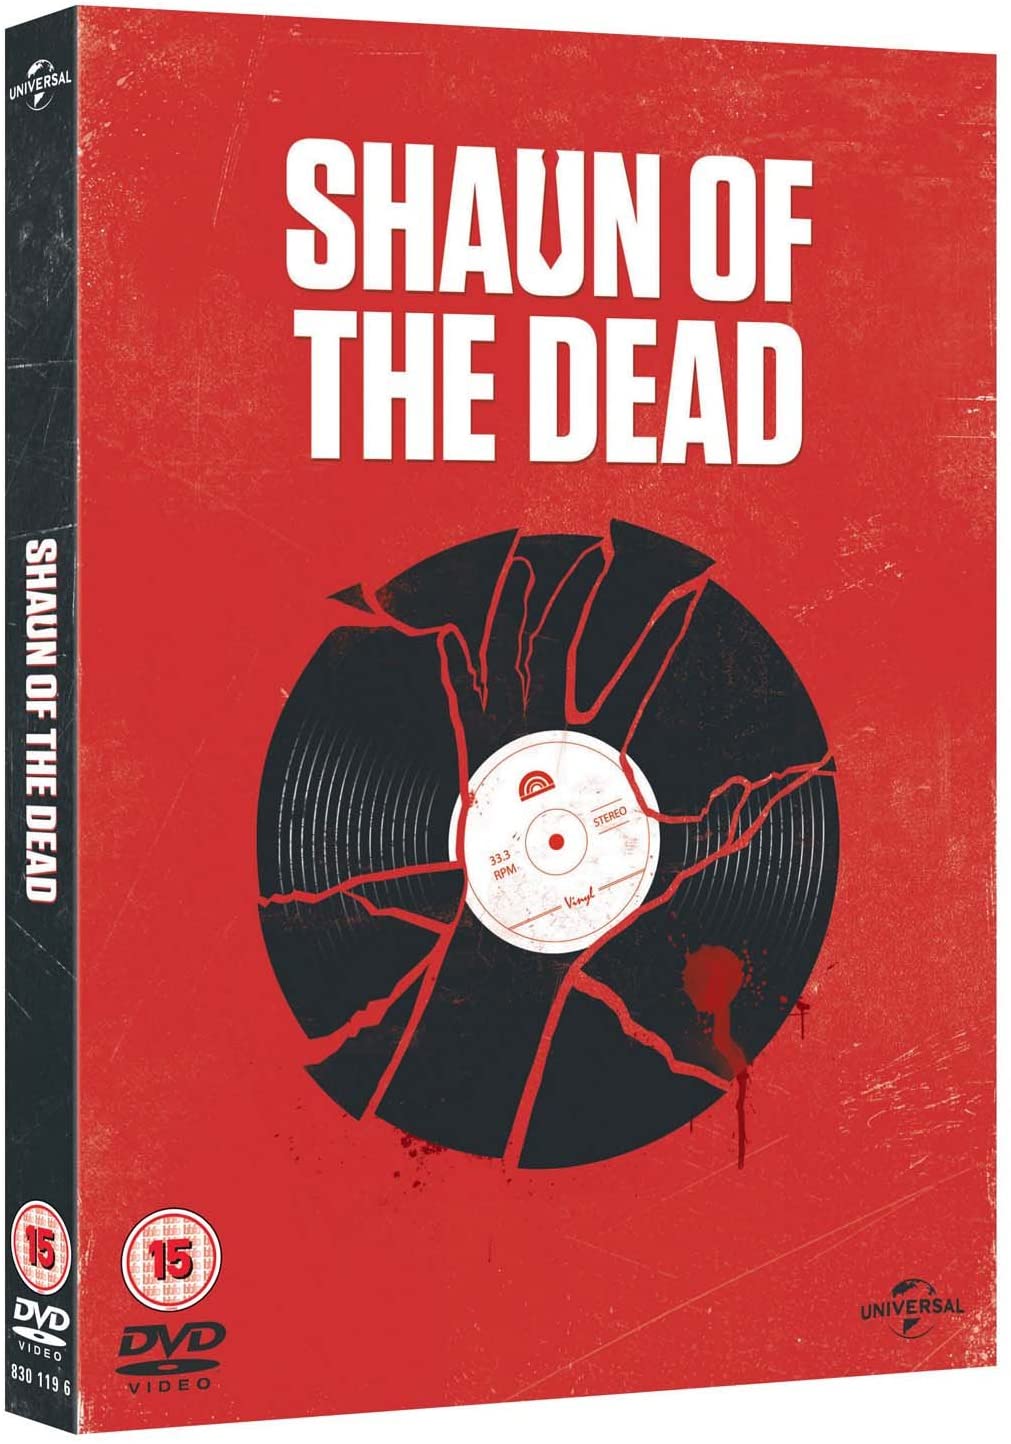 Shaun Of The Dead [2017] - Horror/Comedy [DVD]